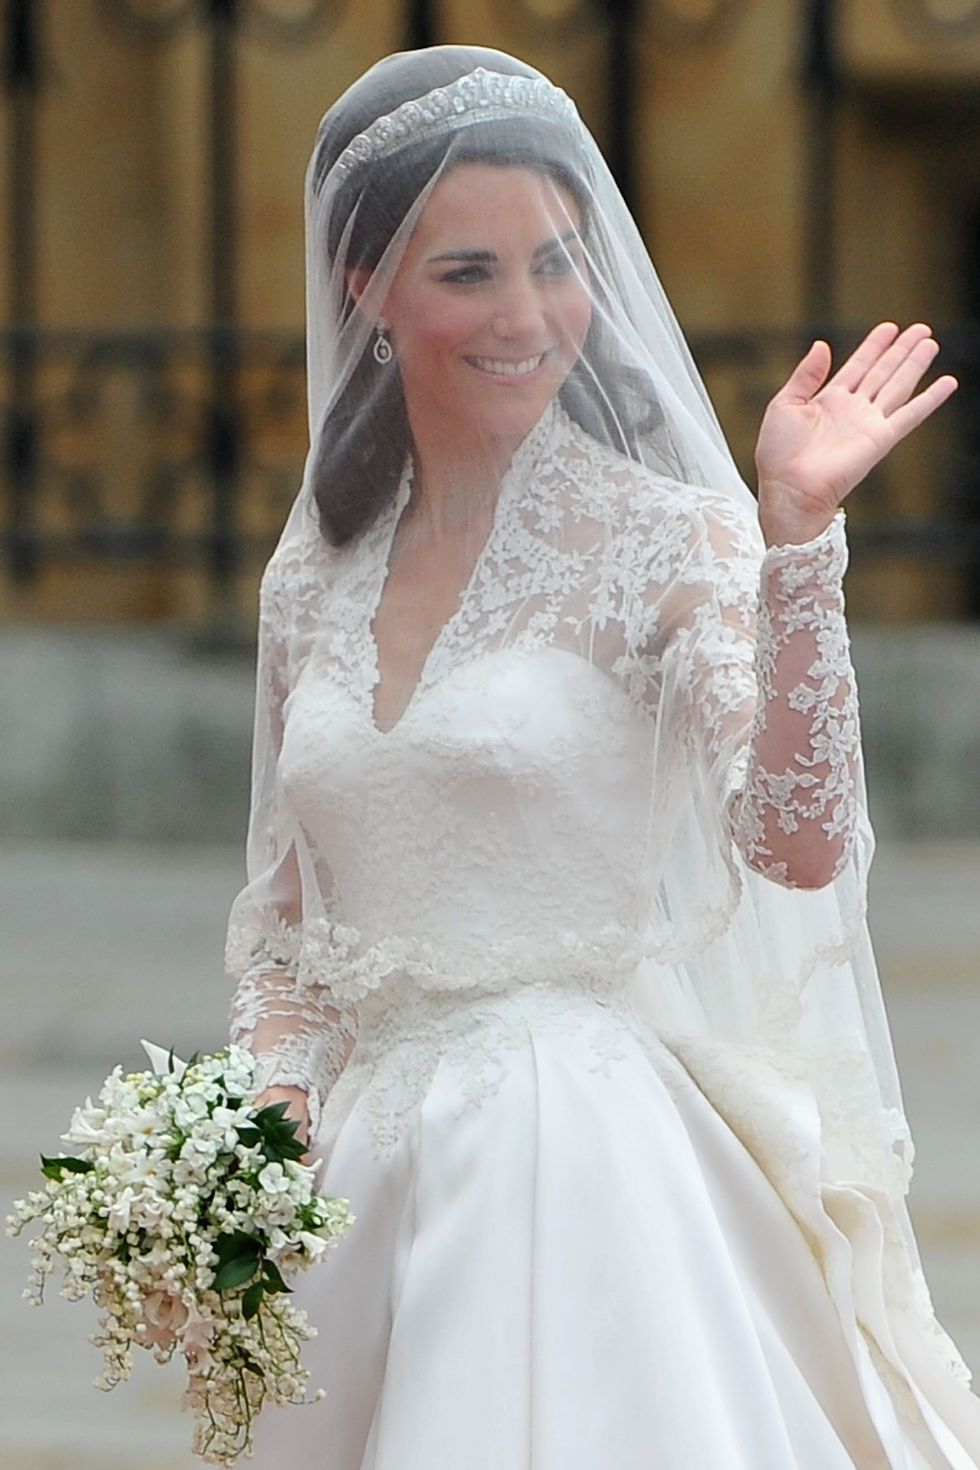 catherine wearing the cartier halo tiara